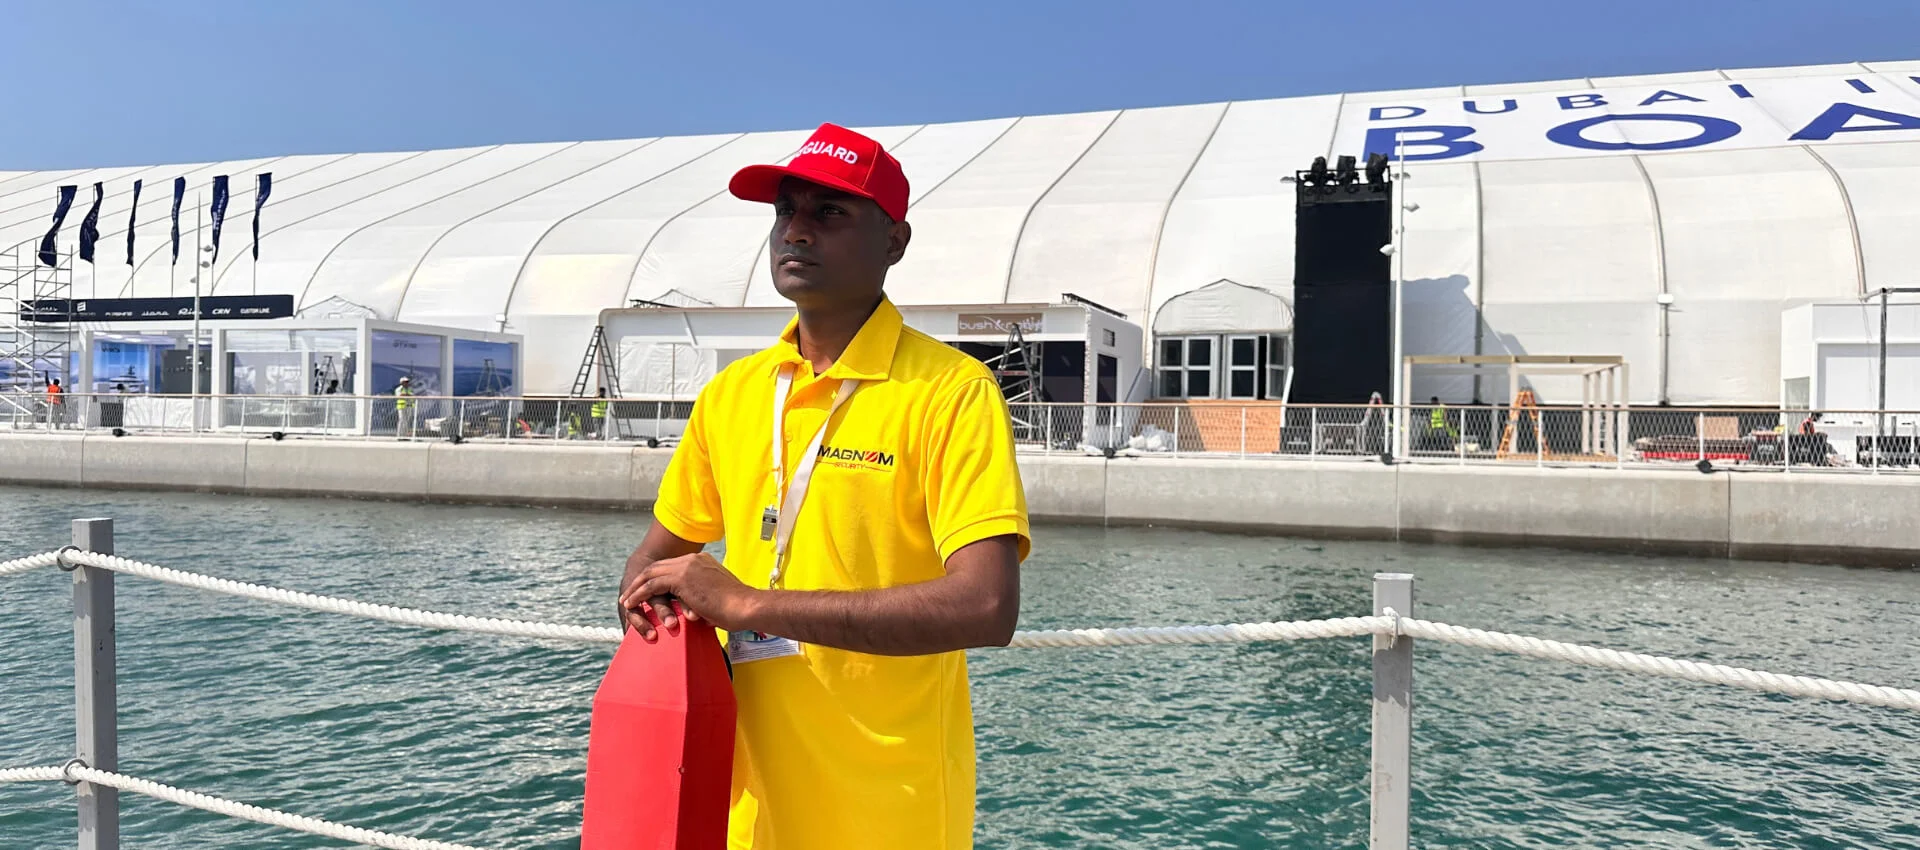 Lifeguard companies in sharjah